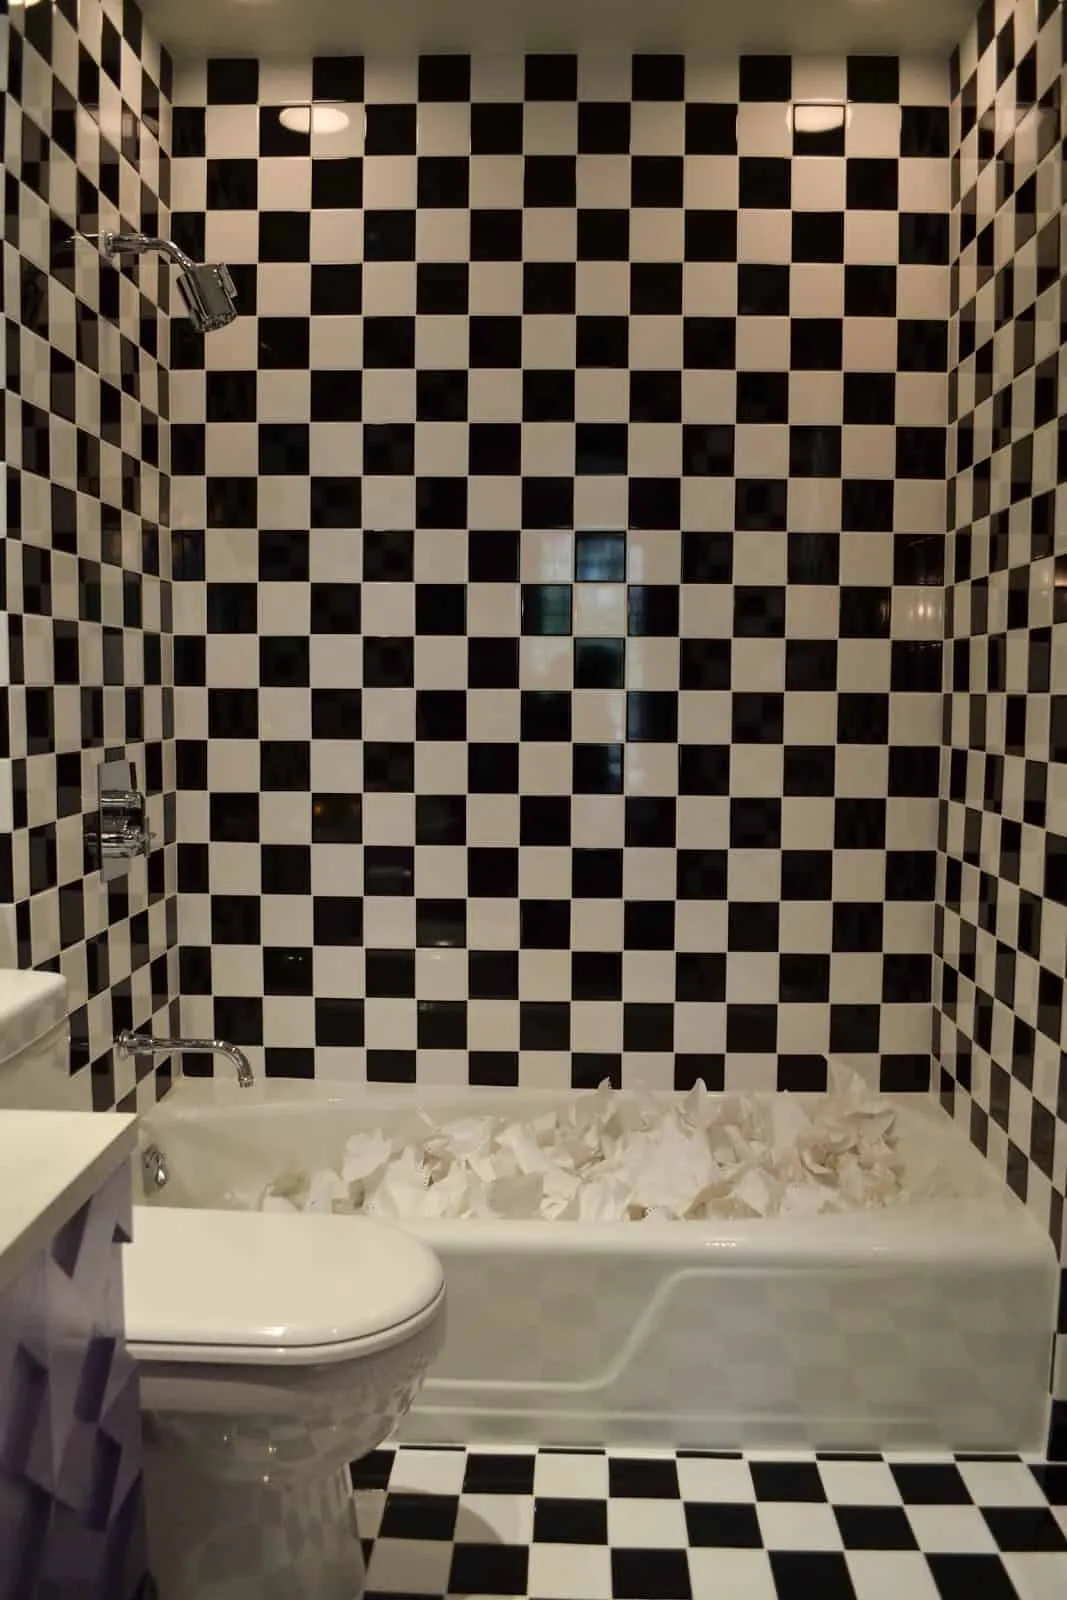 Checkerboard designer bathroom flooring tiles & tiling design with similar floor and wall